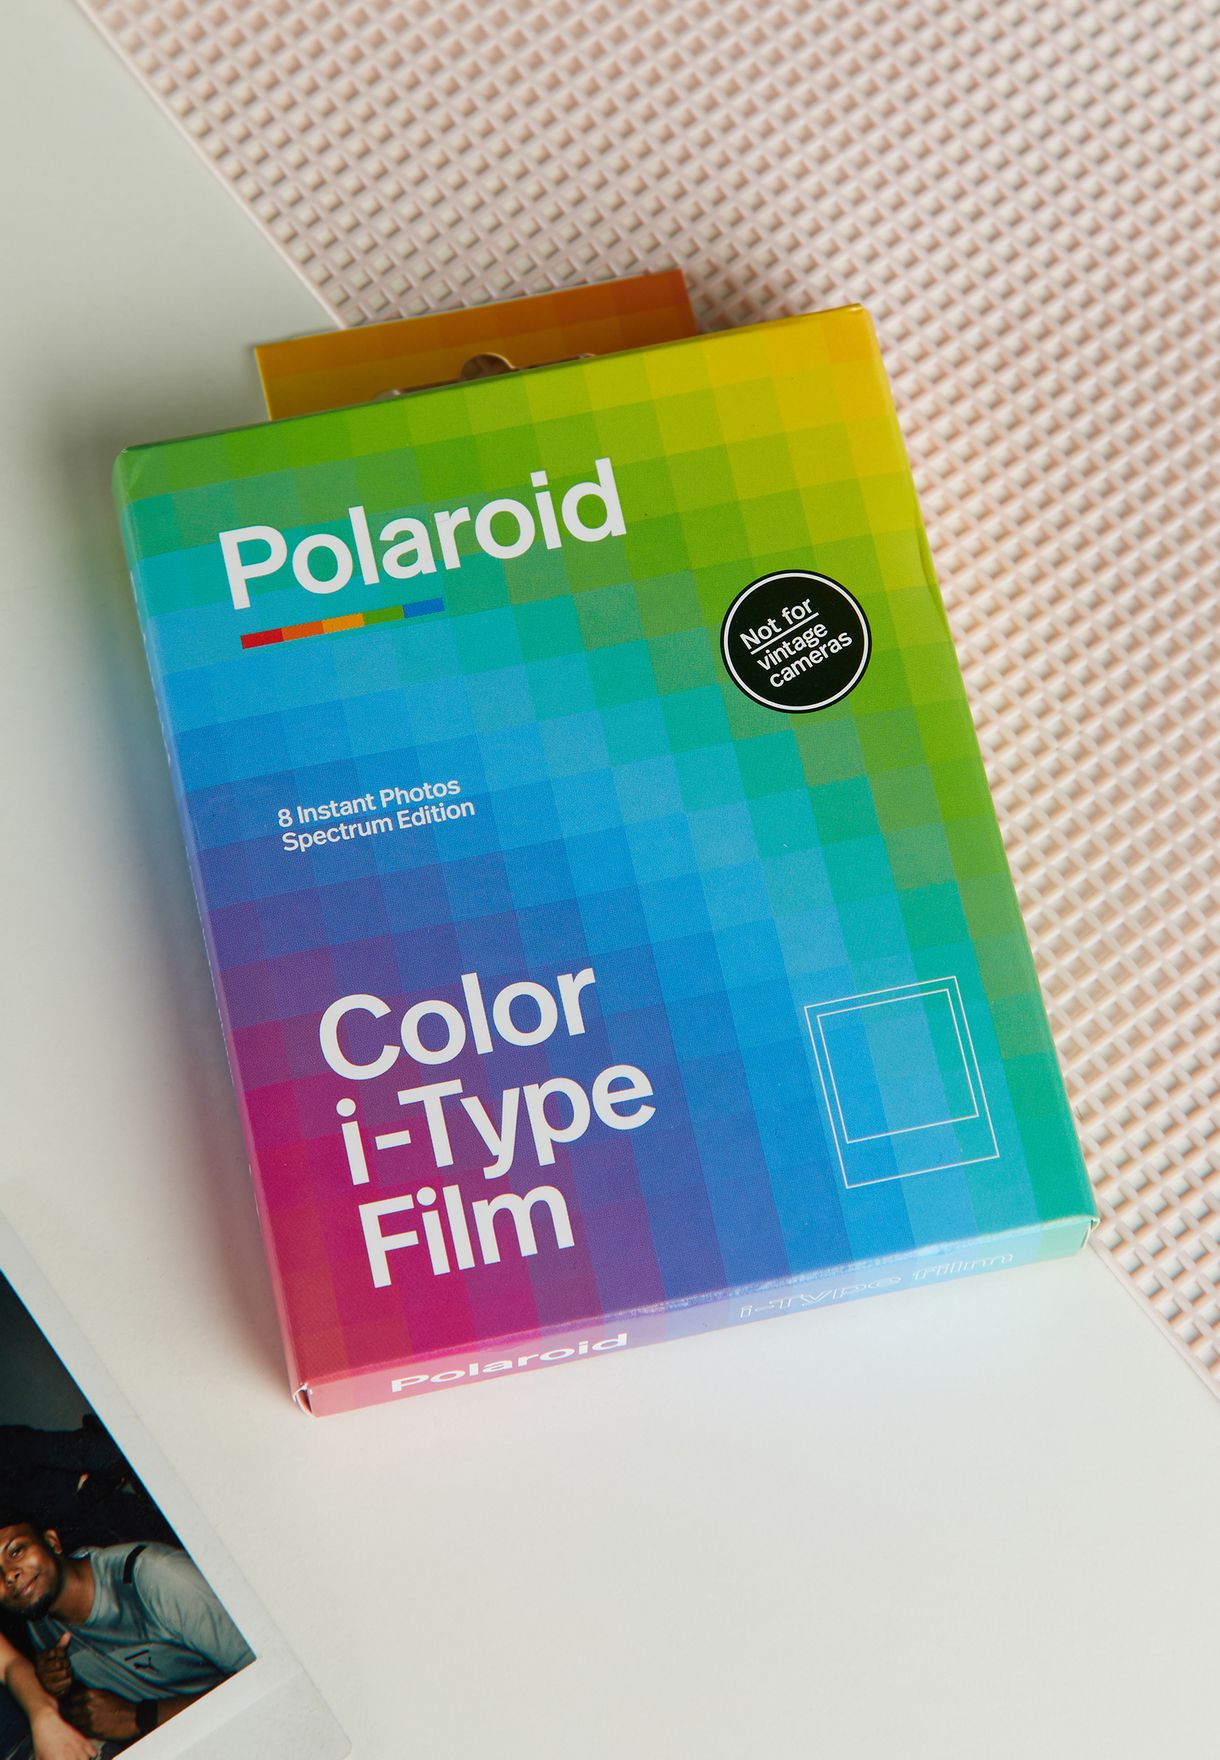 Polaroid Color Film For I-Type -Spectrum Edition